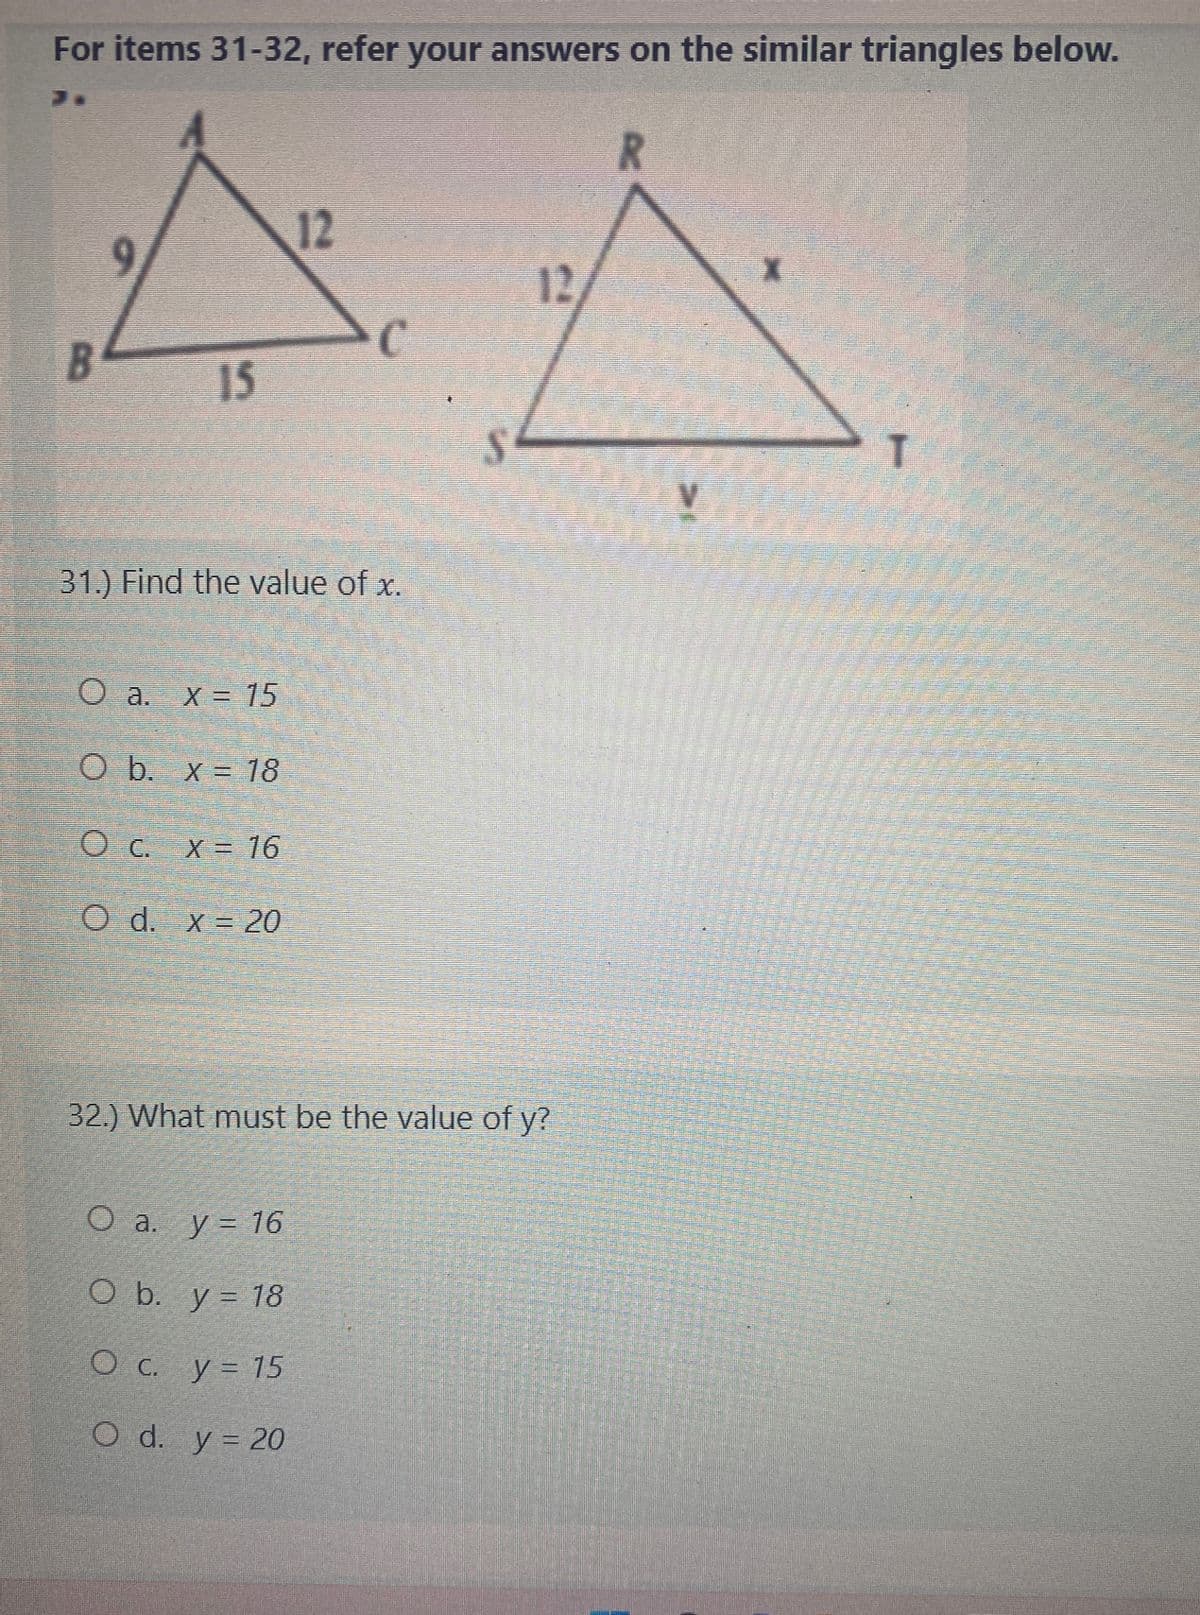 For items 31-32, refer your answers on the similar triangles below.
R
12
T
12
C
15
31.) Find the value of x.
O a.
a. x = 15
O b. x = 18
O c. x = 16
O d. x 20
32.) What must be the value of y?
O a. y = 16
O b. y = 18
O c. y = 15
O d. y = 20
--